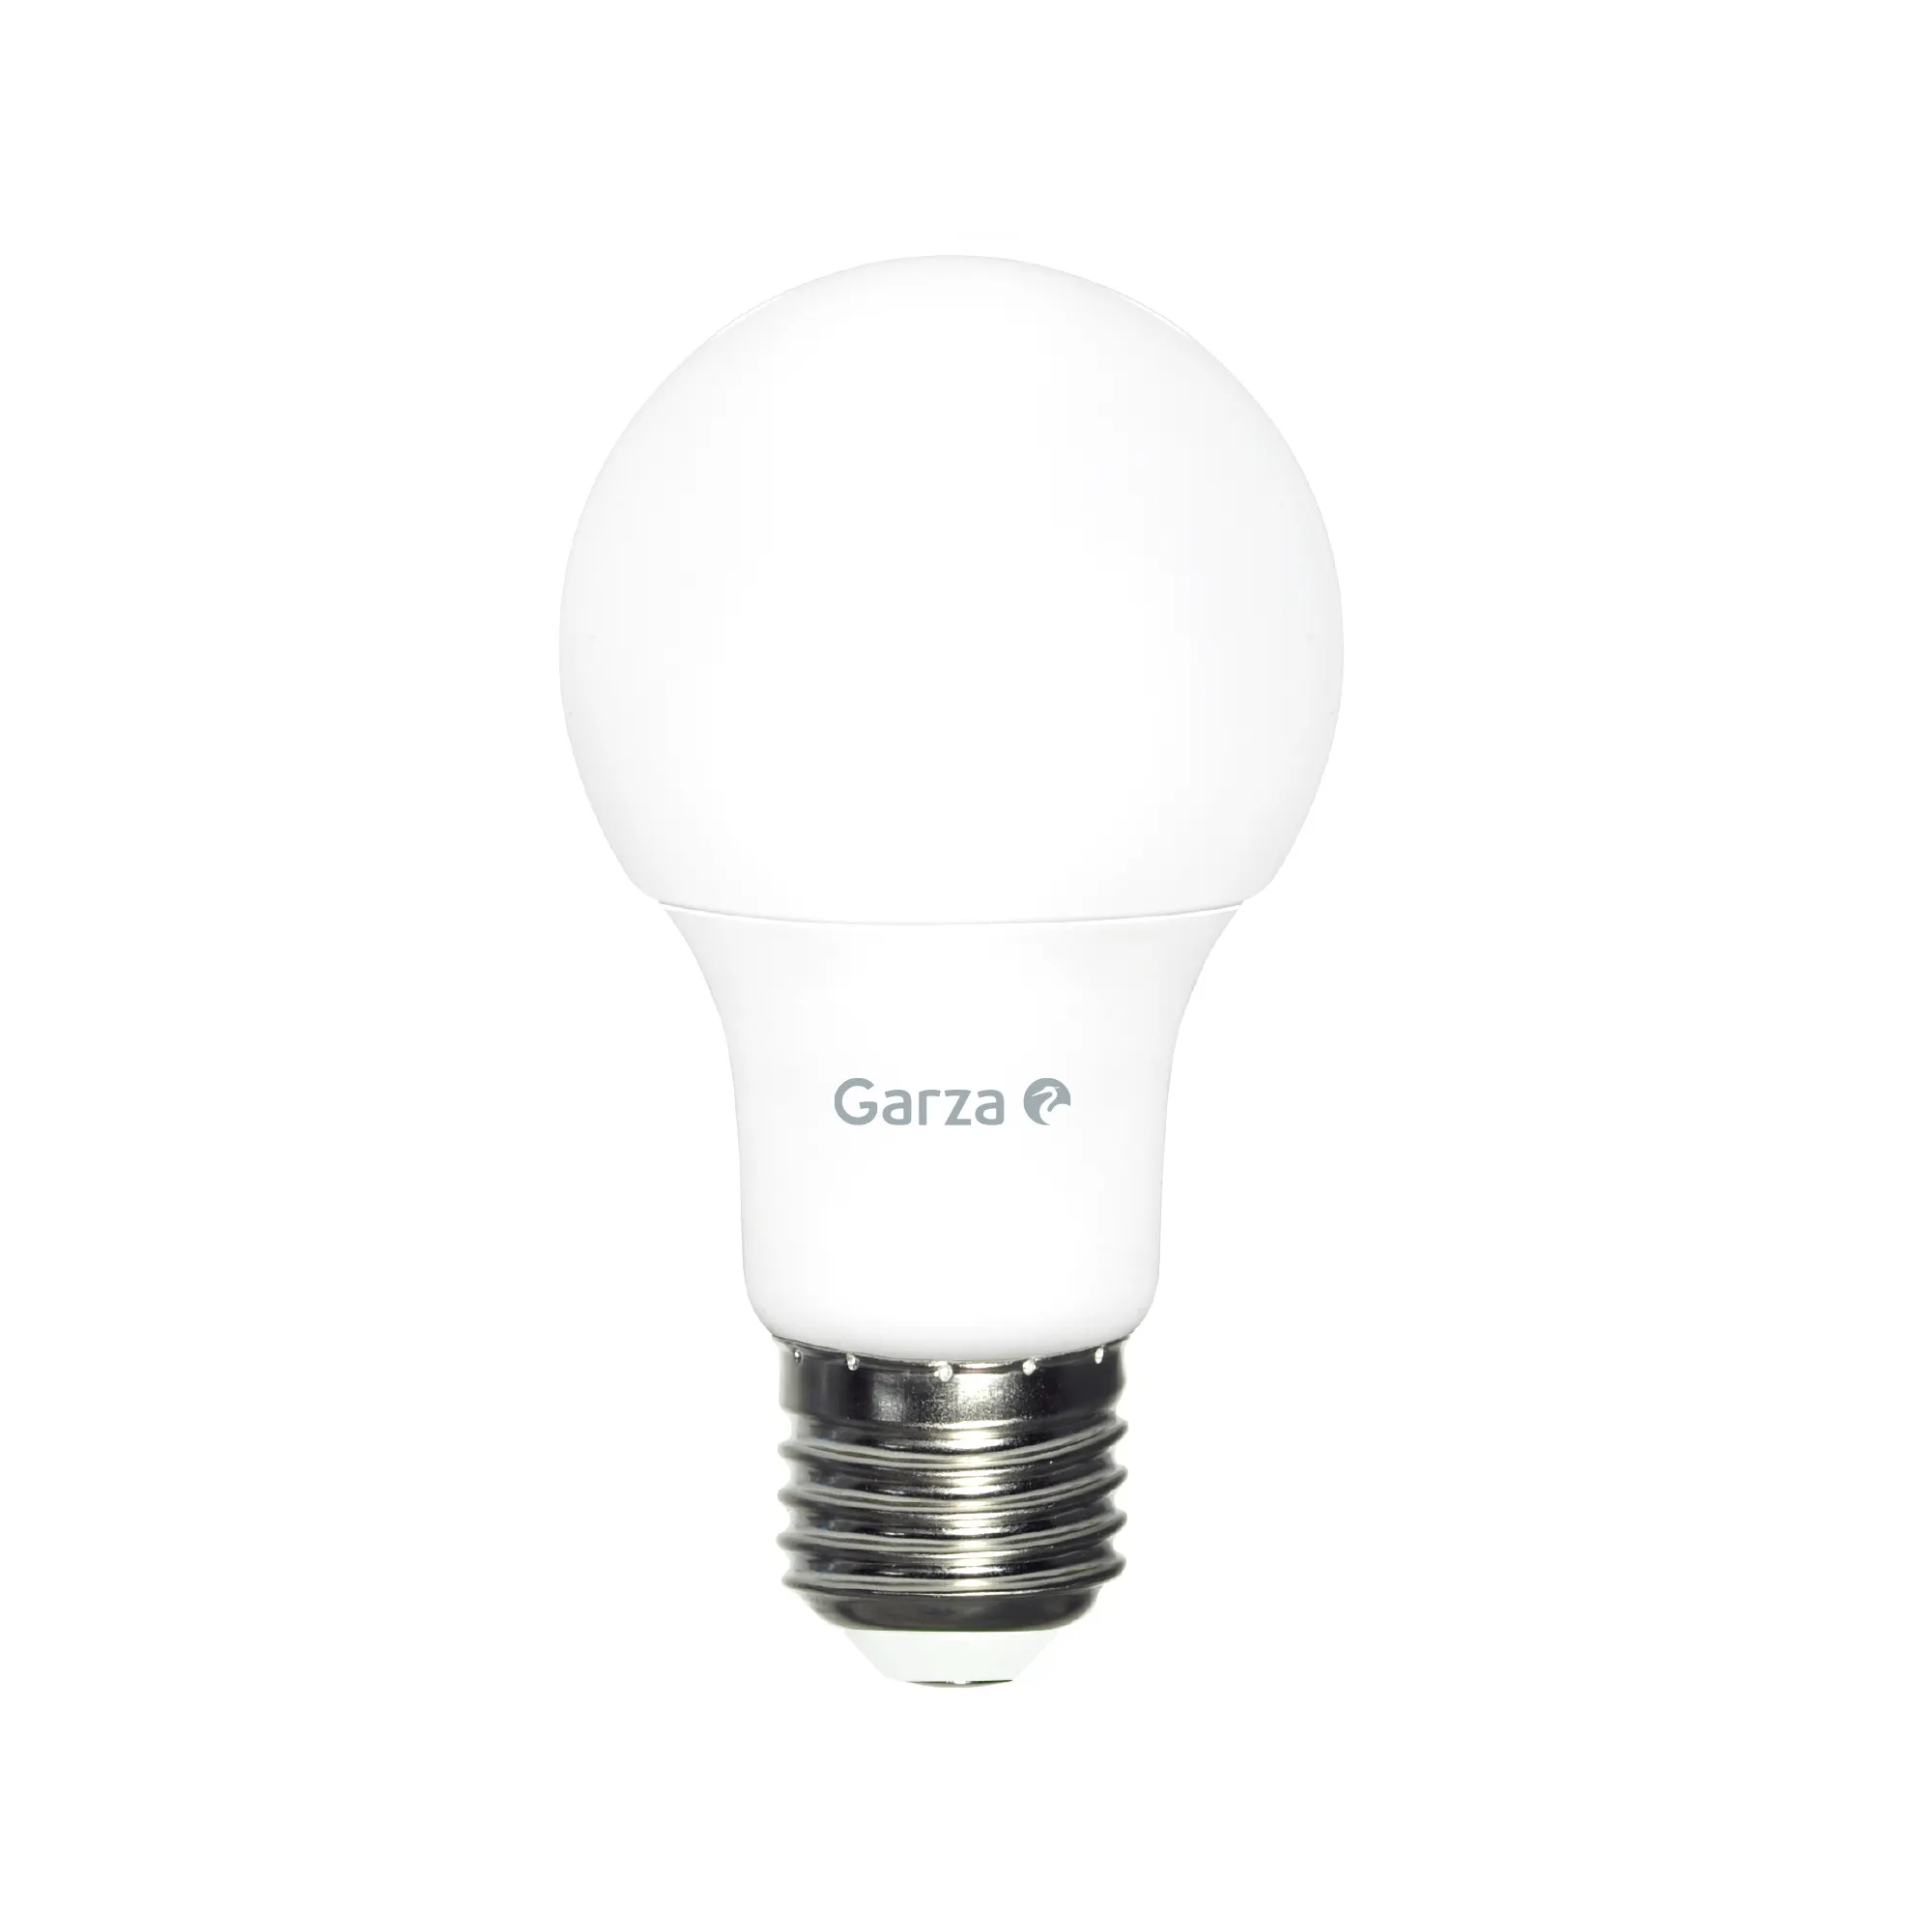 Lampadine a LED Garza Standard, luce calda 3000k, presa E27, lumen 1520 15w